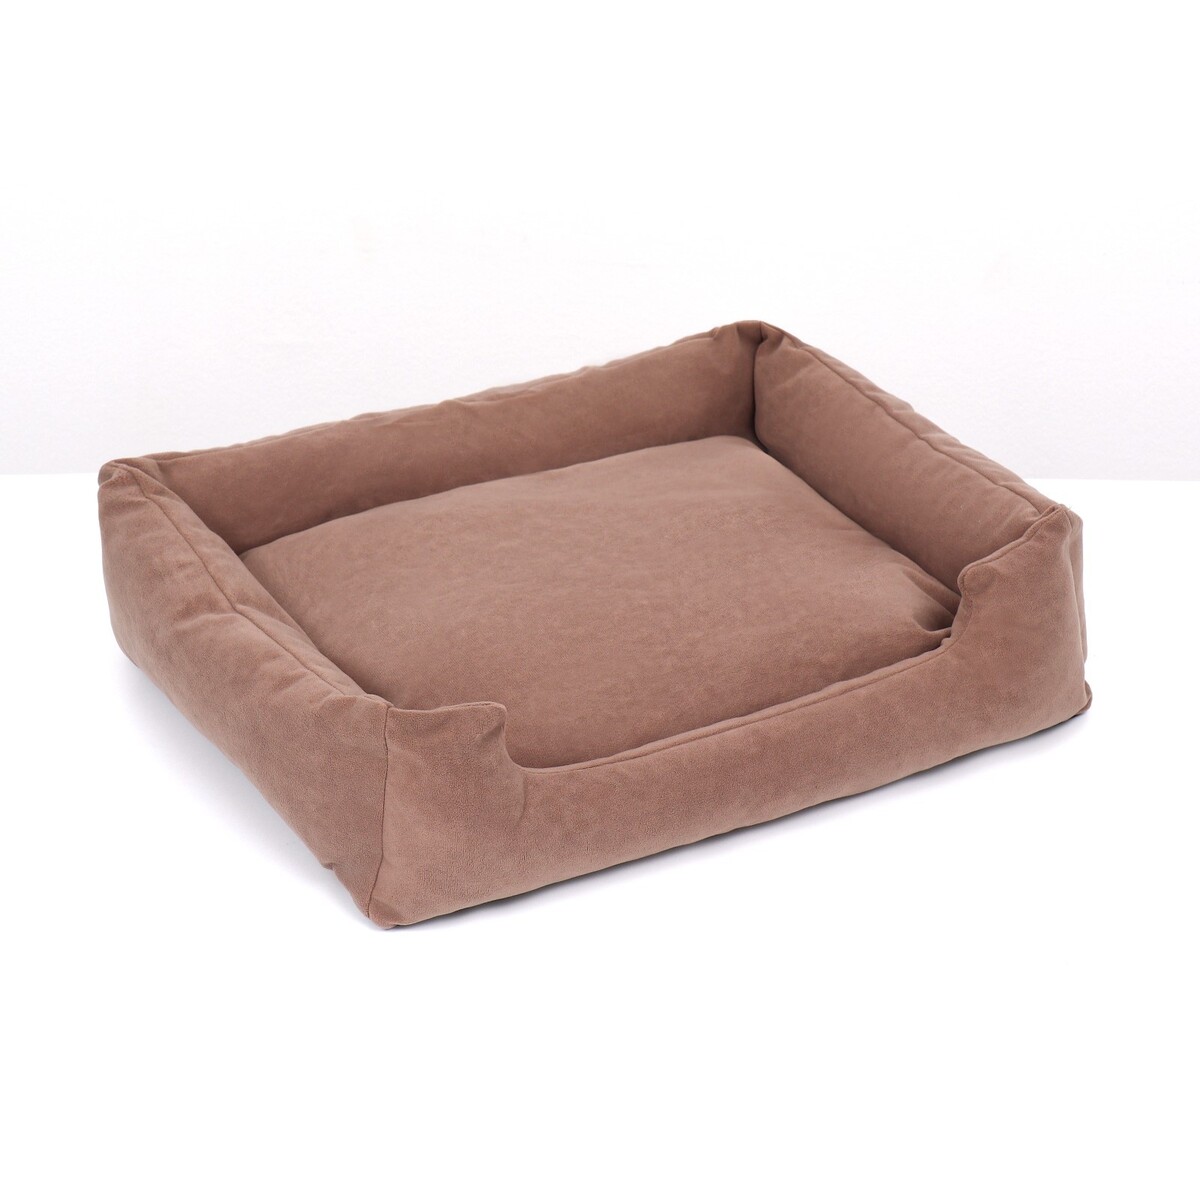 Лежанка-диван, 53 х 42 х 11 см, коричневая диван мягкий 52 х 42 х 10 см кашемир черно красный